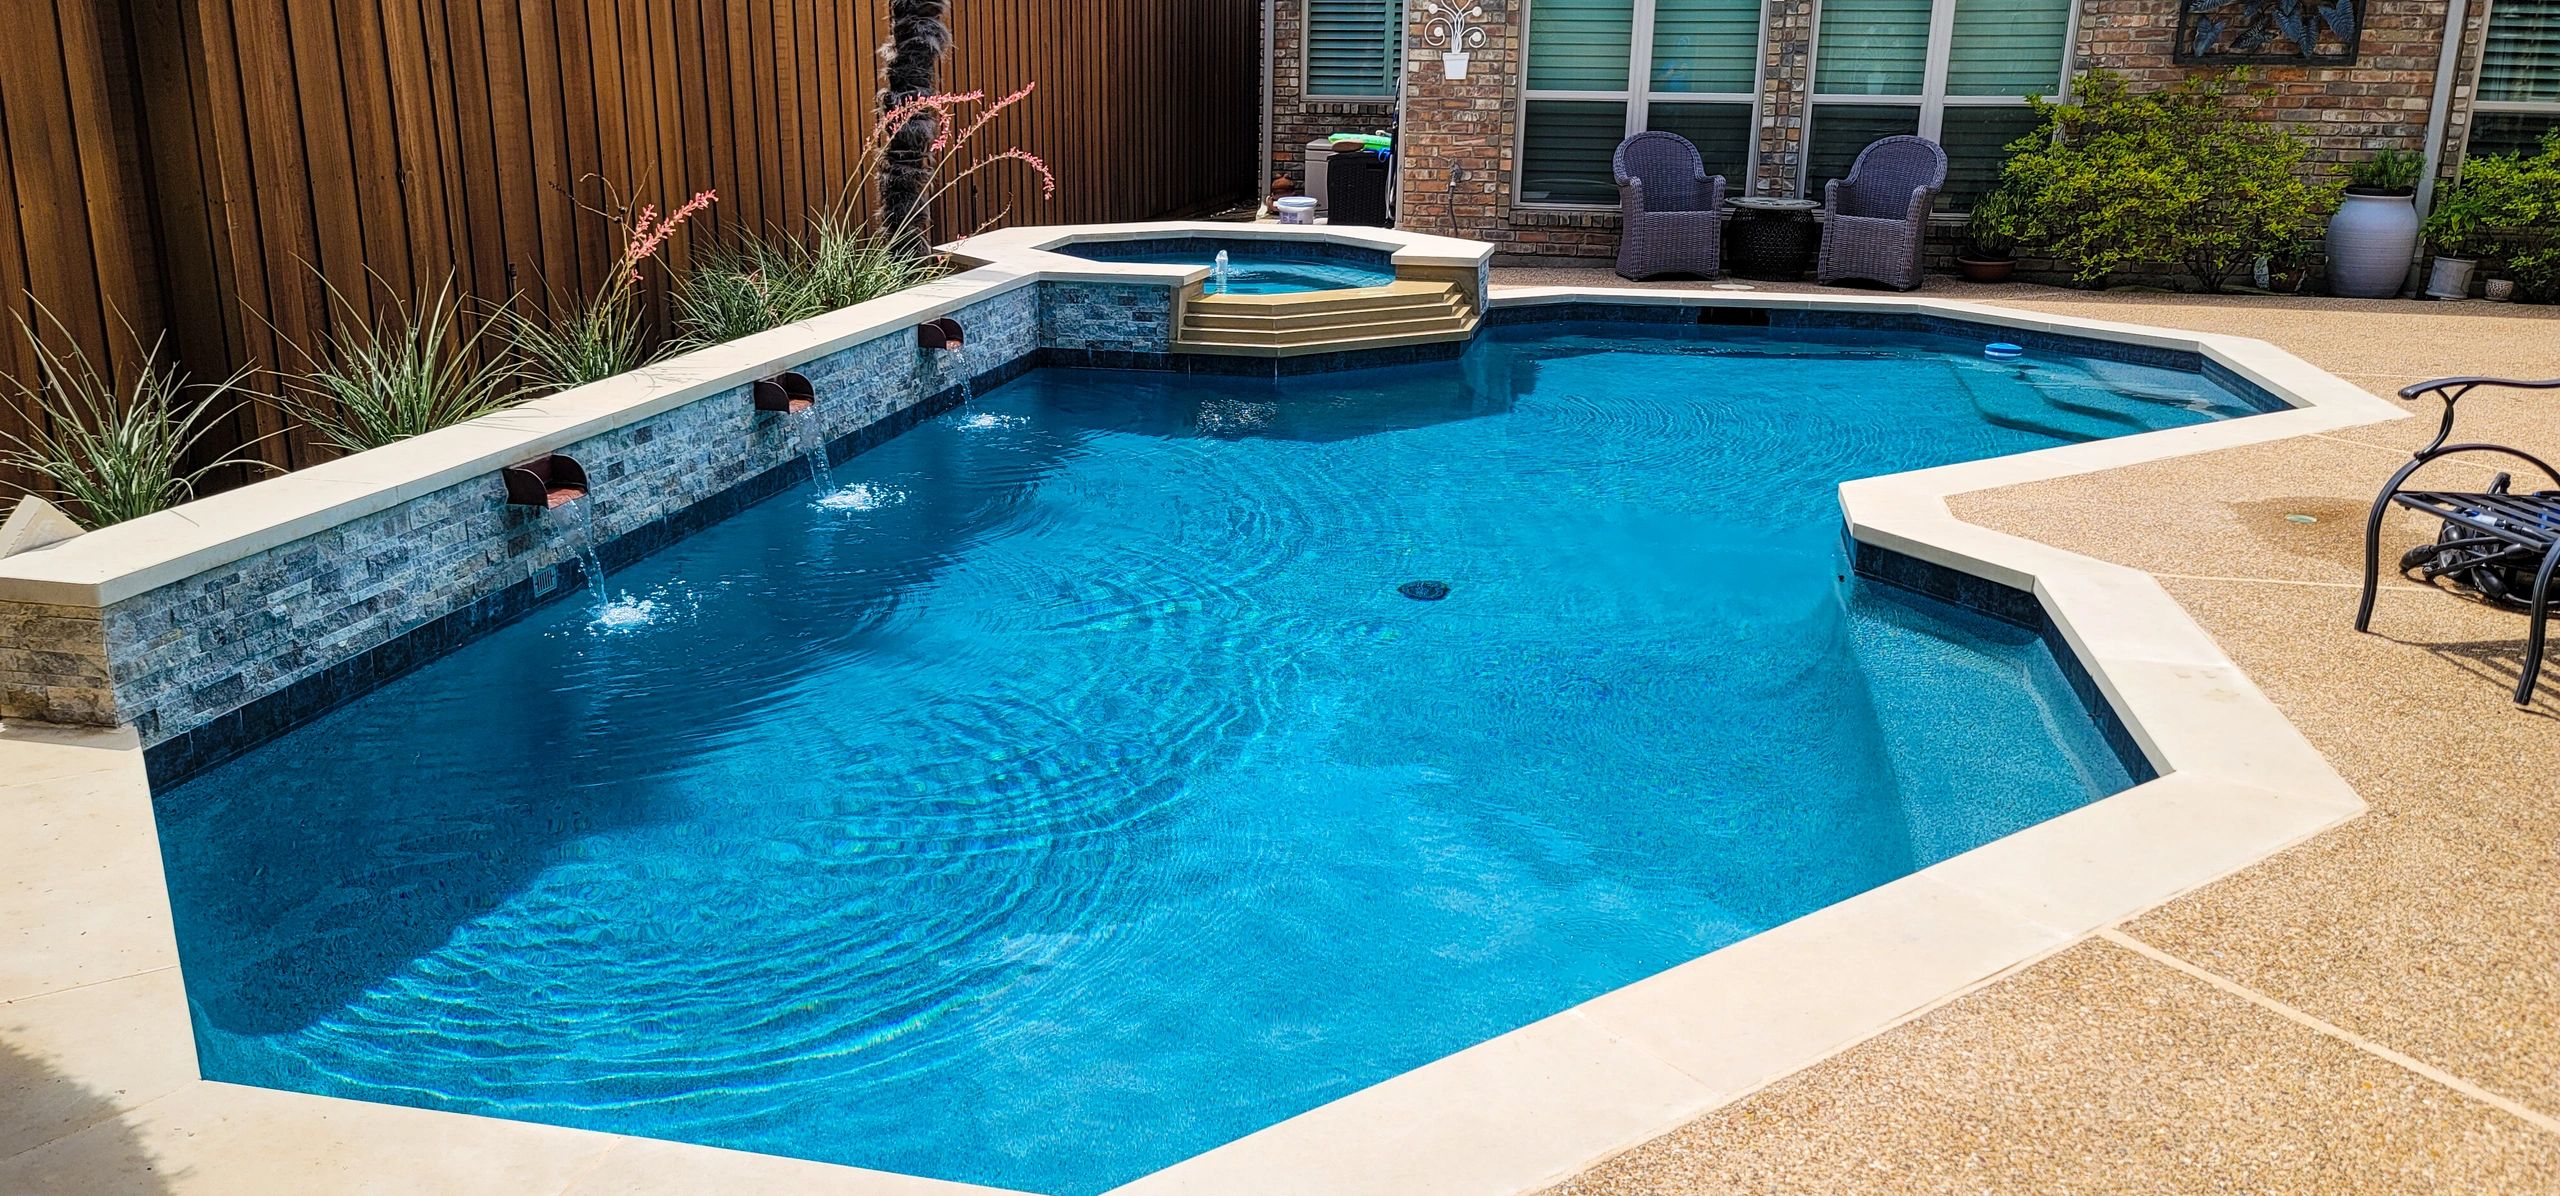 dallas richardson pool remodel 9 Dallas Pool Remodeling